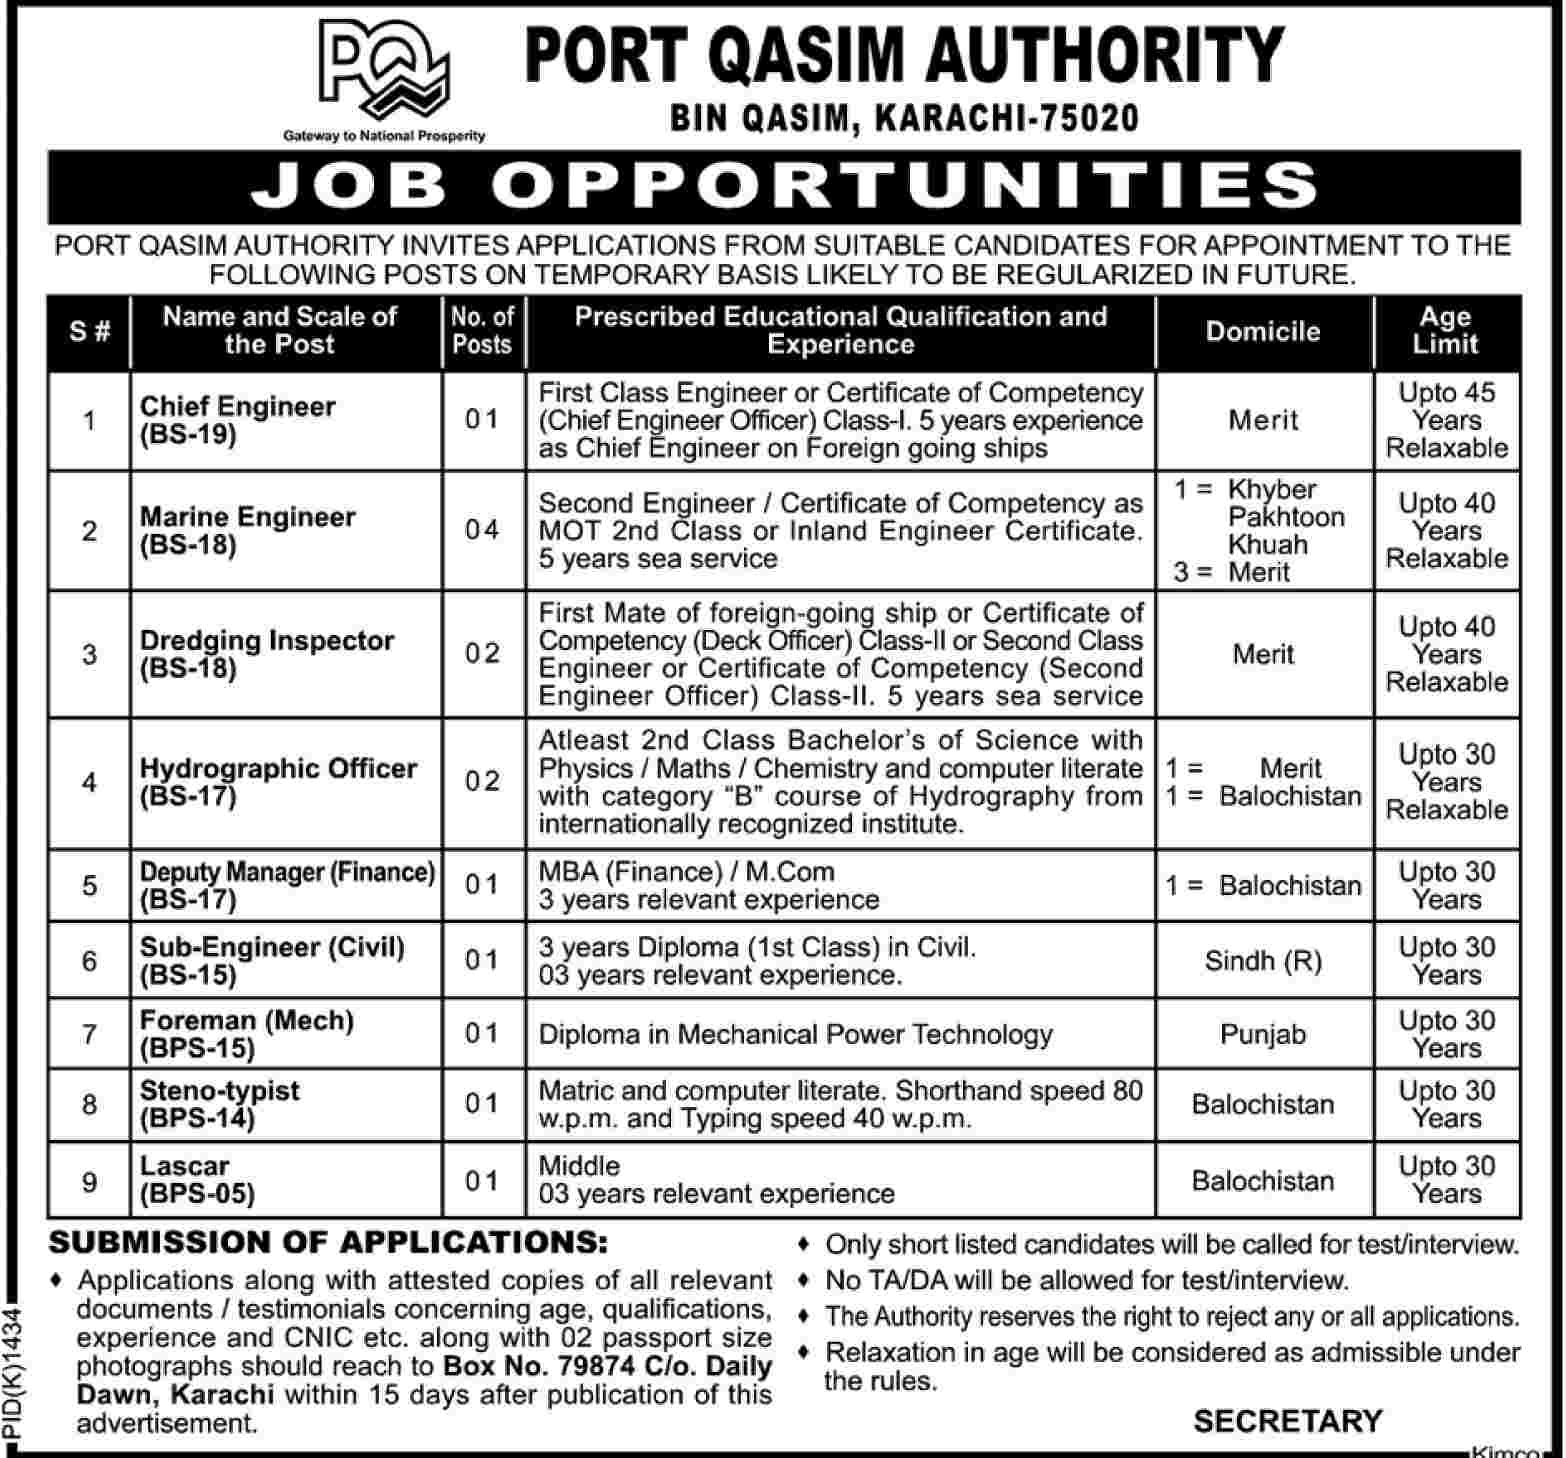 Port Qasim Authority Jobs Opportunity